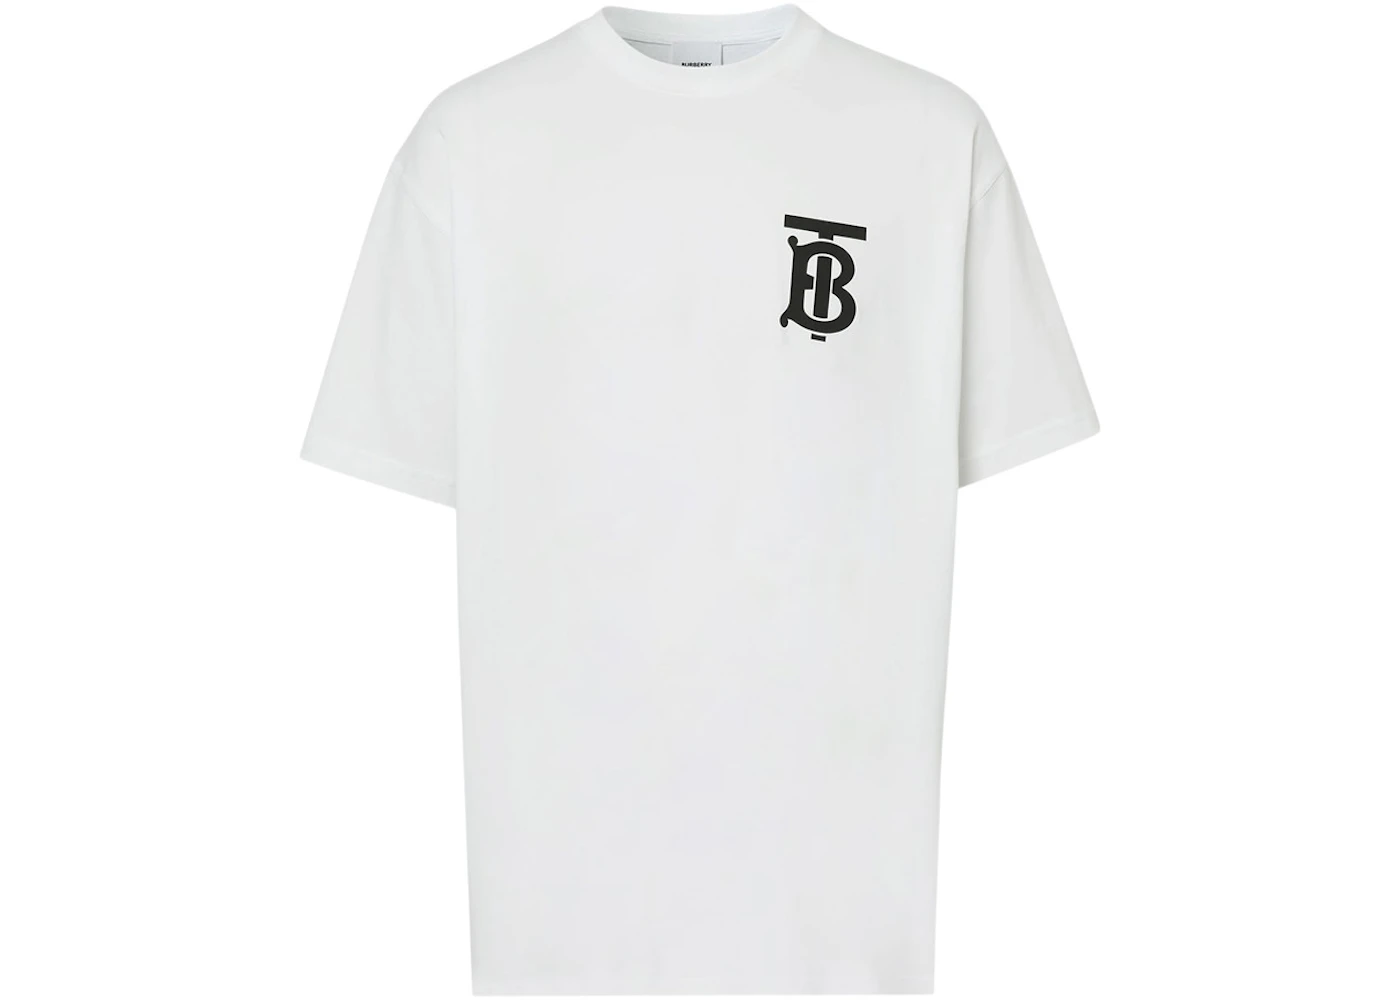 Burberry Women's Monogram Motif Oversized T-shirt White - US